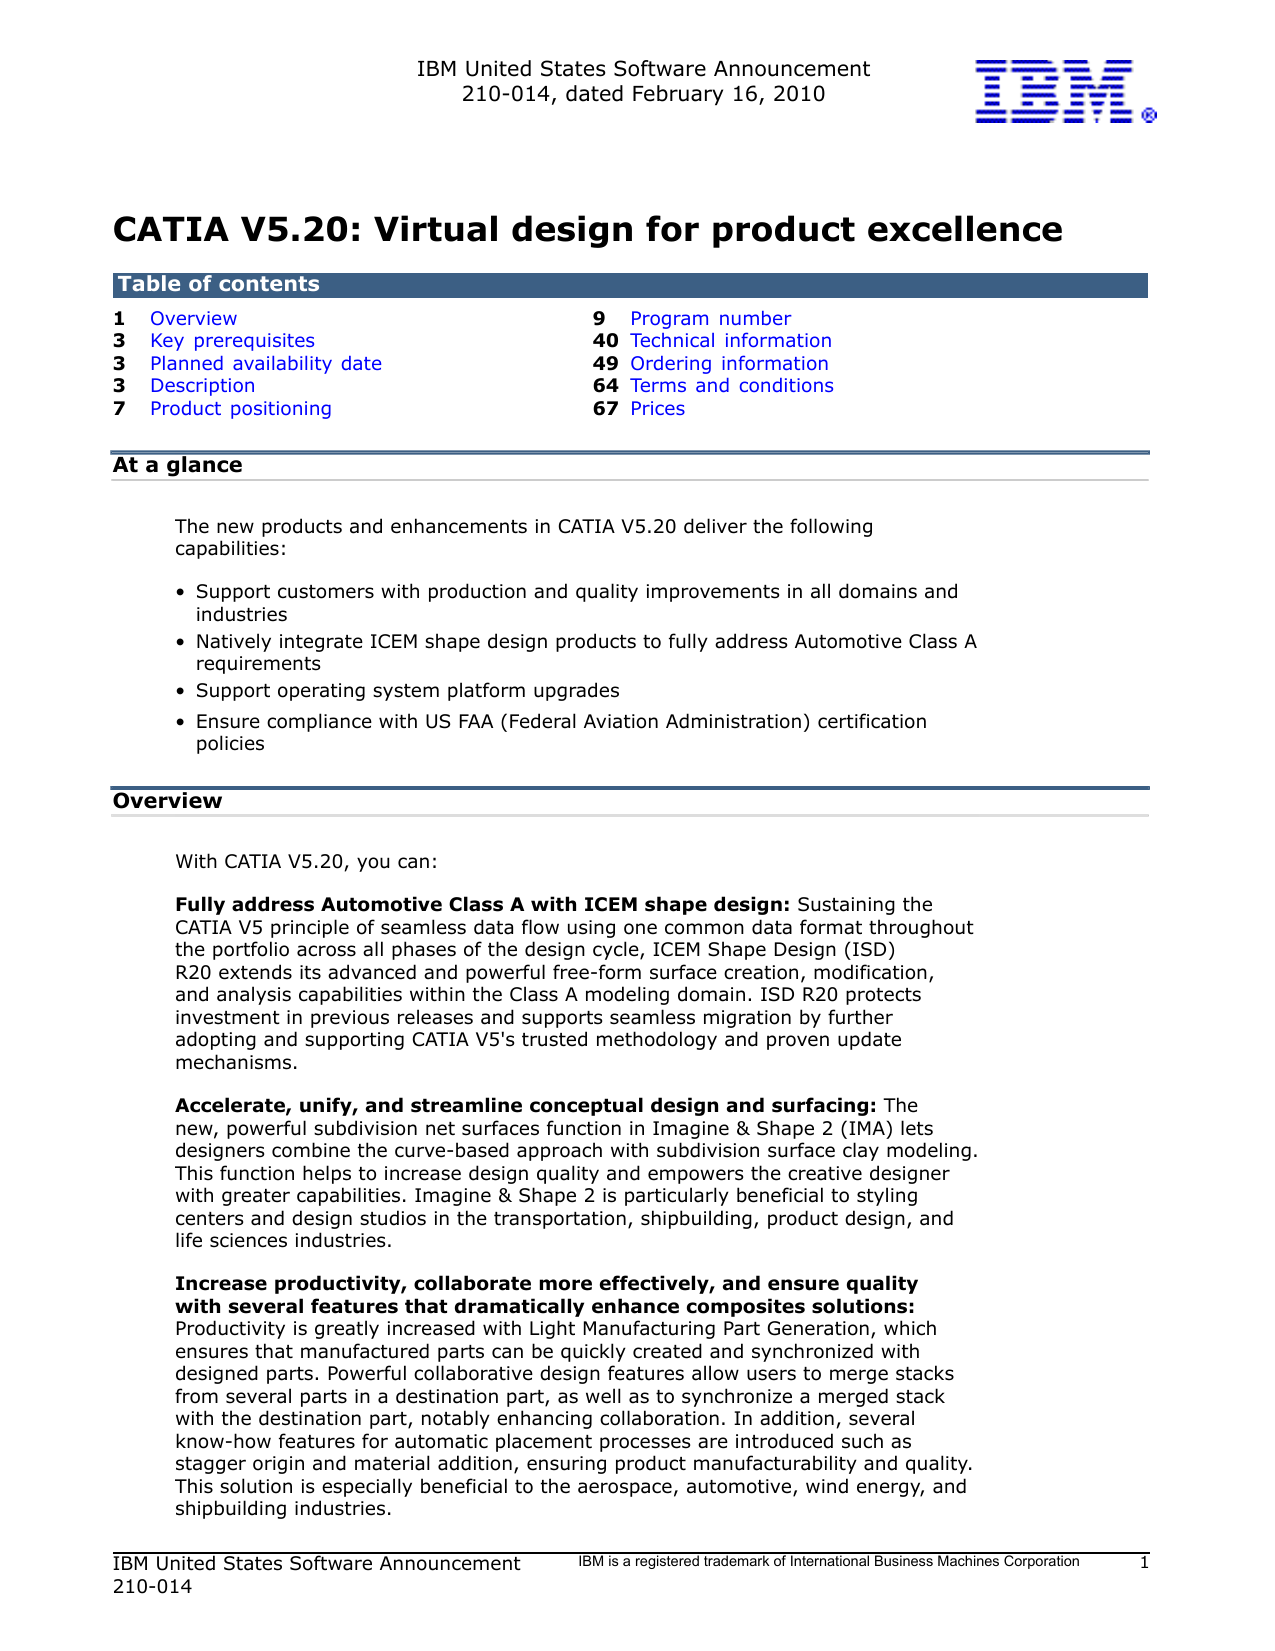 catia v5 software